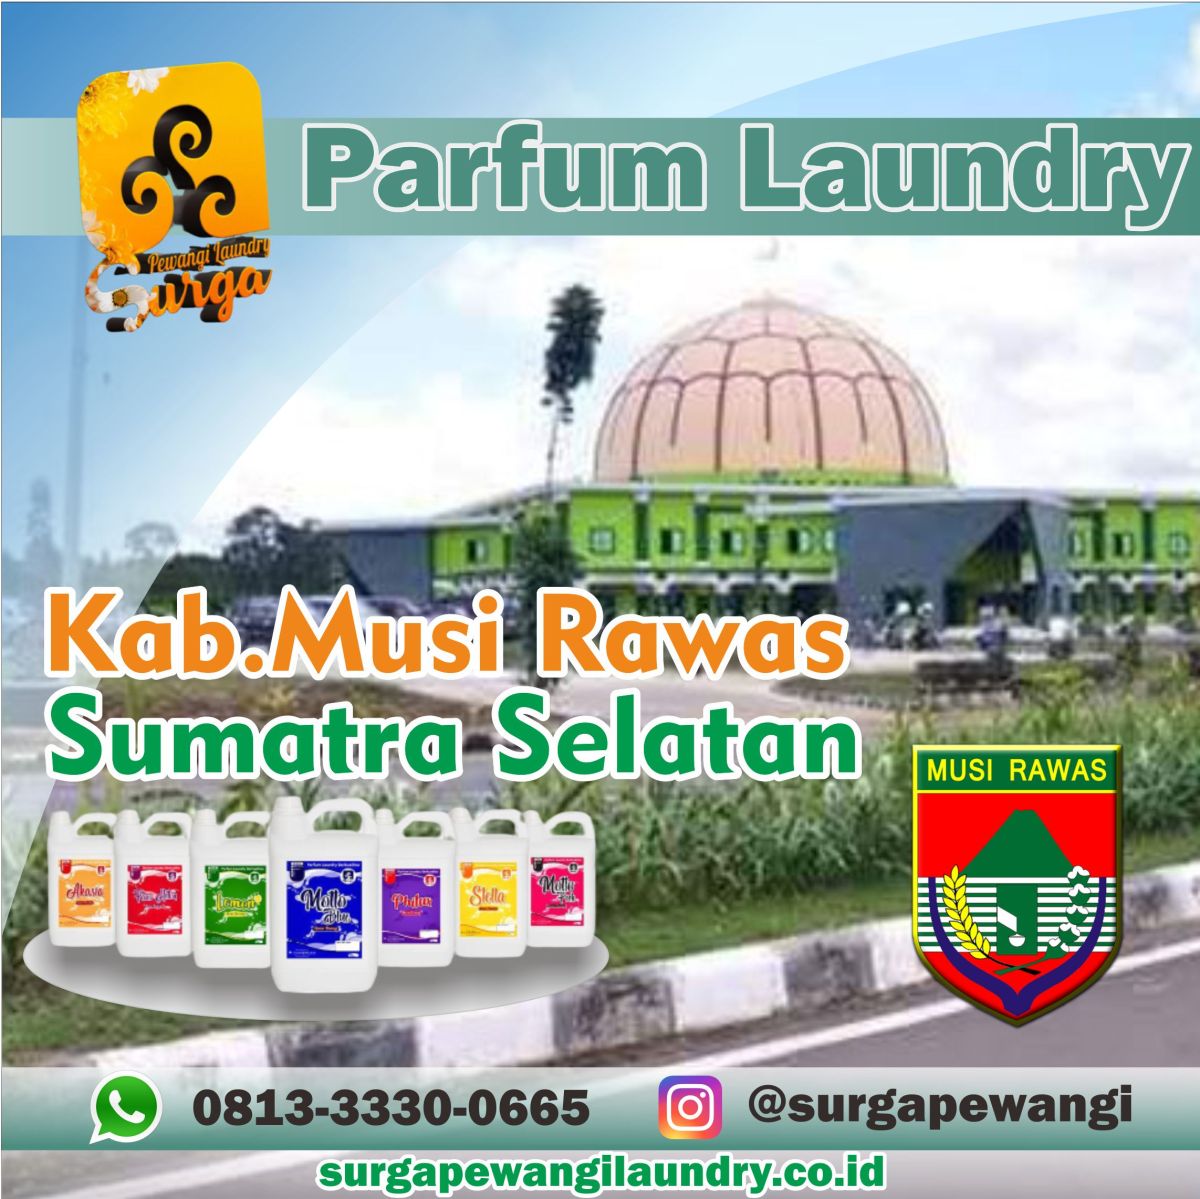 Parfum Laundry Kabupaten Musi Rawas, Sumatra Selatan